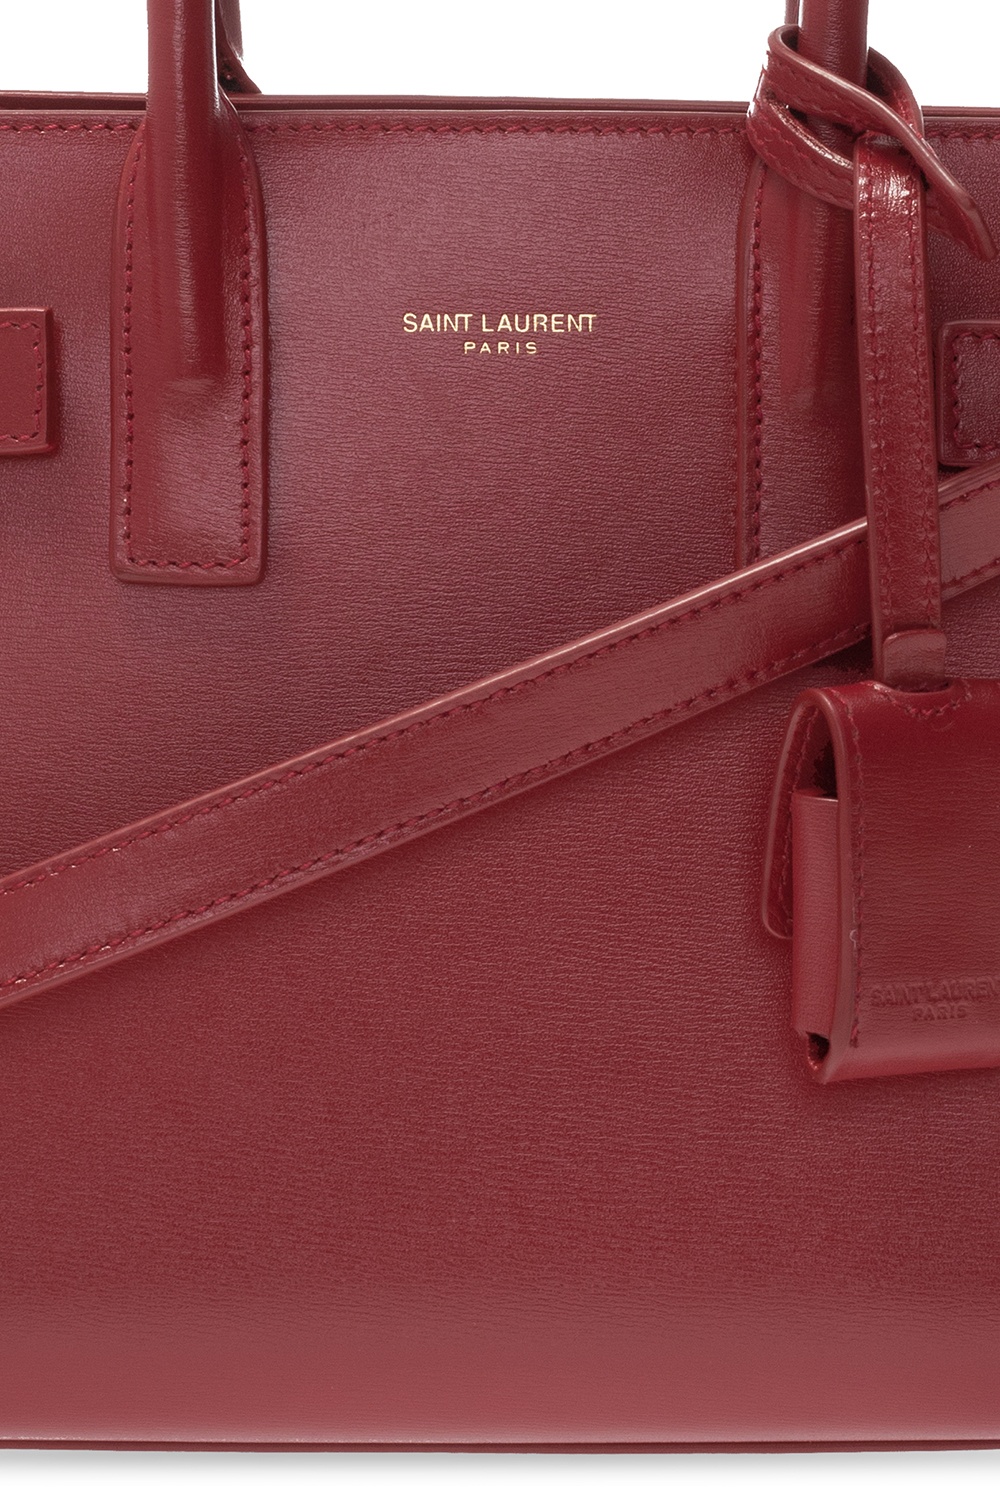 Saint Laurent Burgundy Baby Sac de Jour Smooth Leather Handbag